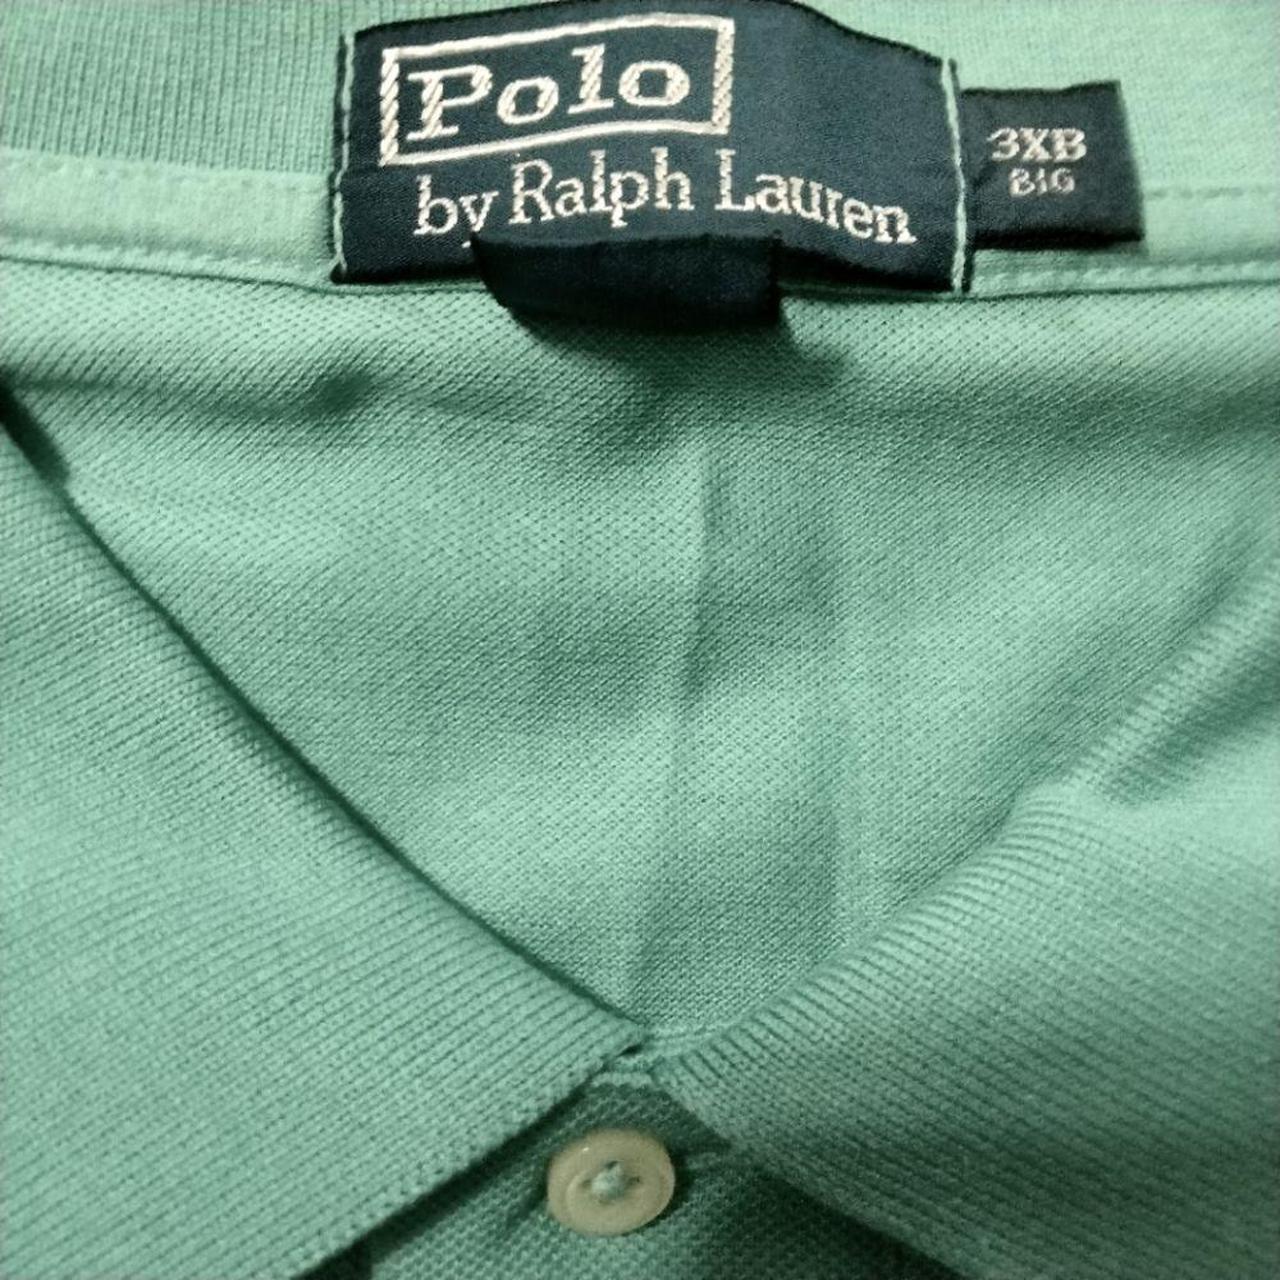 Polo by Ralph Lauren Polo Shirt Size 3XB Big Aqua - Depop